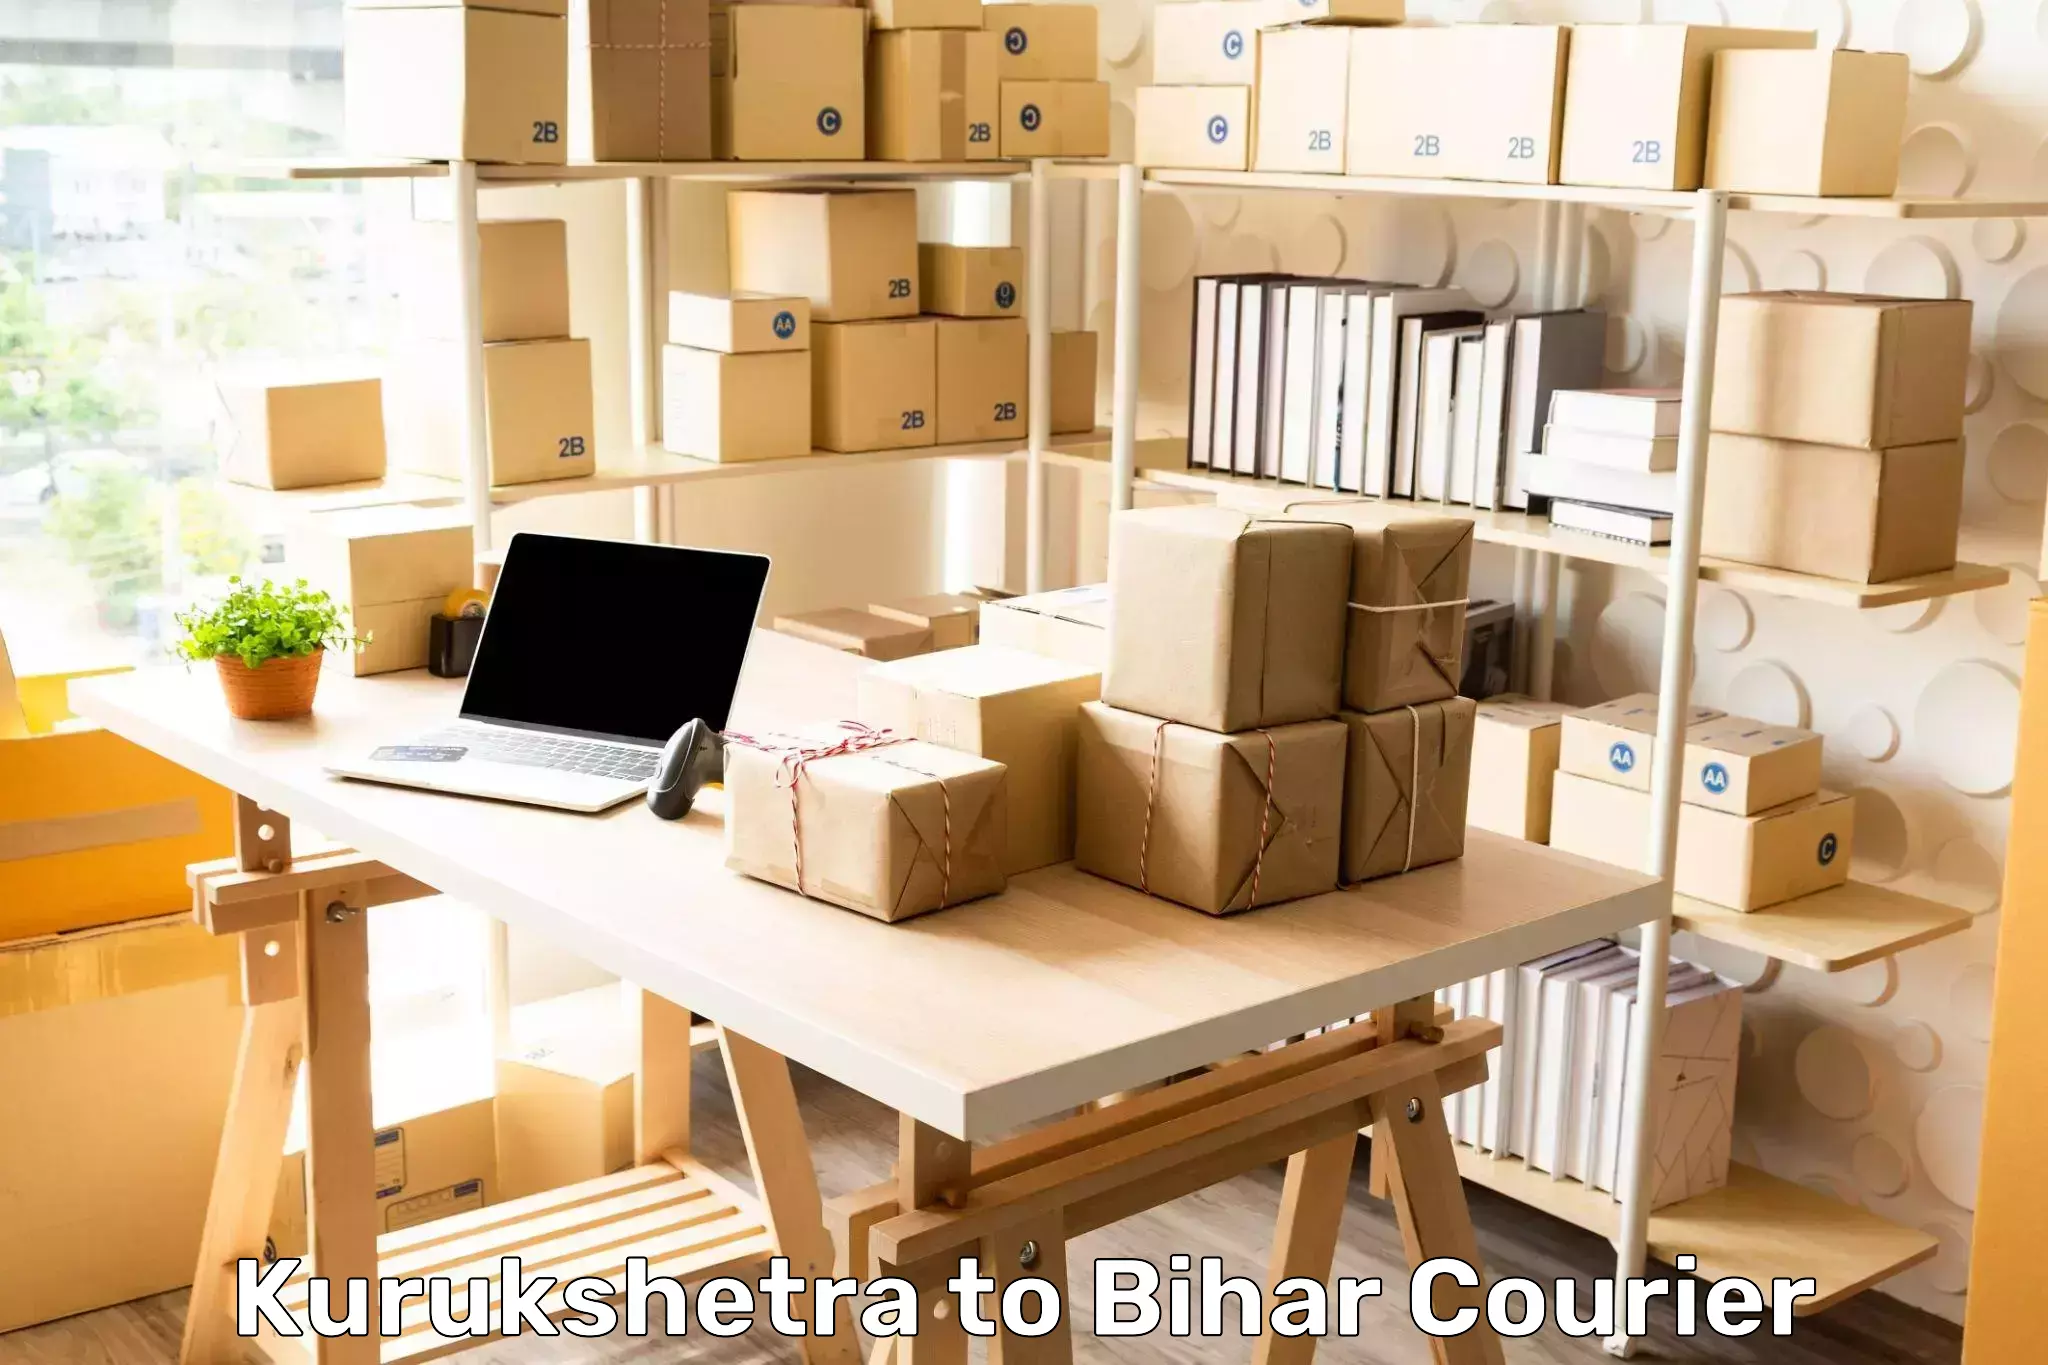 Advanced package delivery in Kurukshetra to Bihar